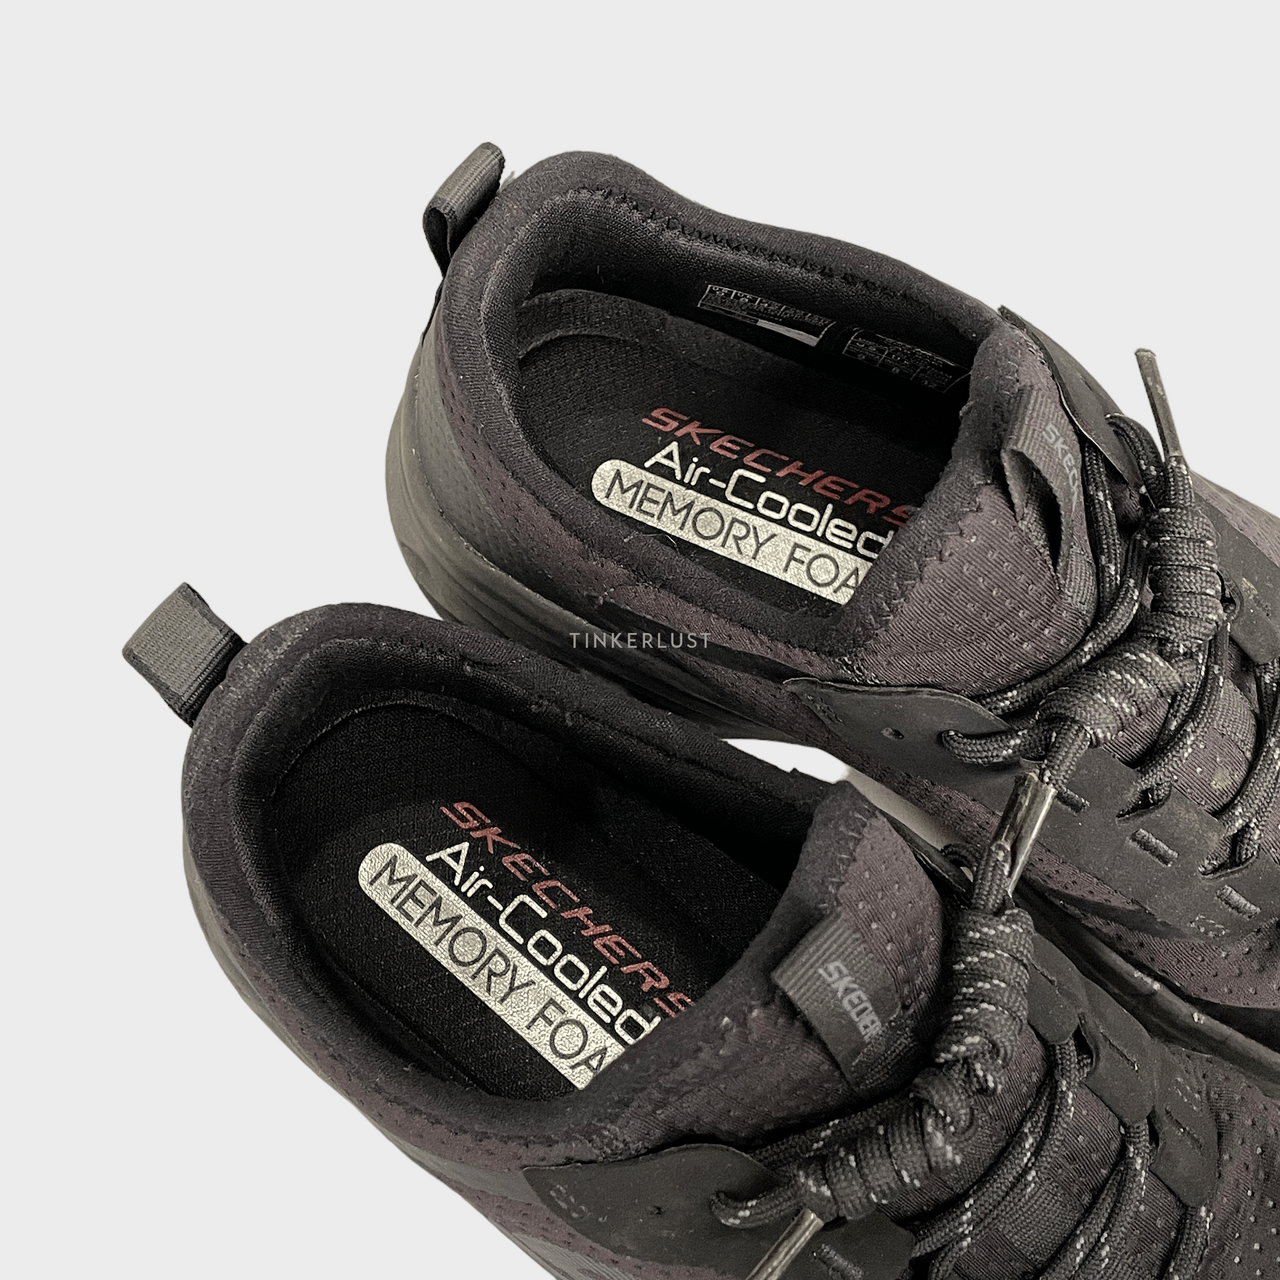 Skechers Black Shoes